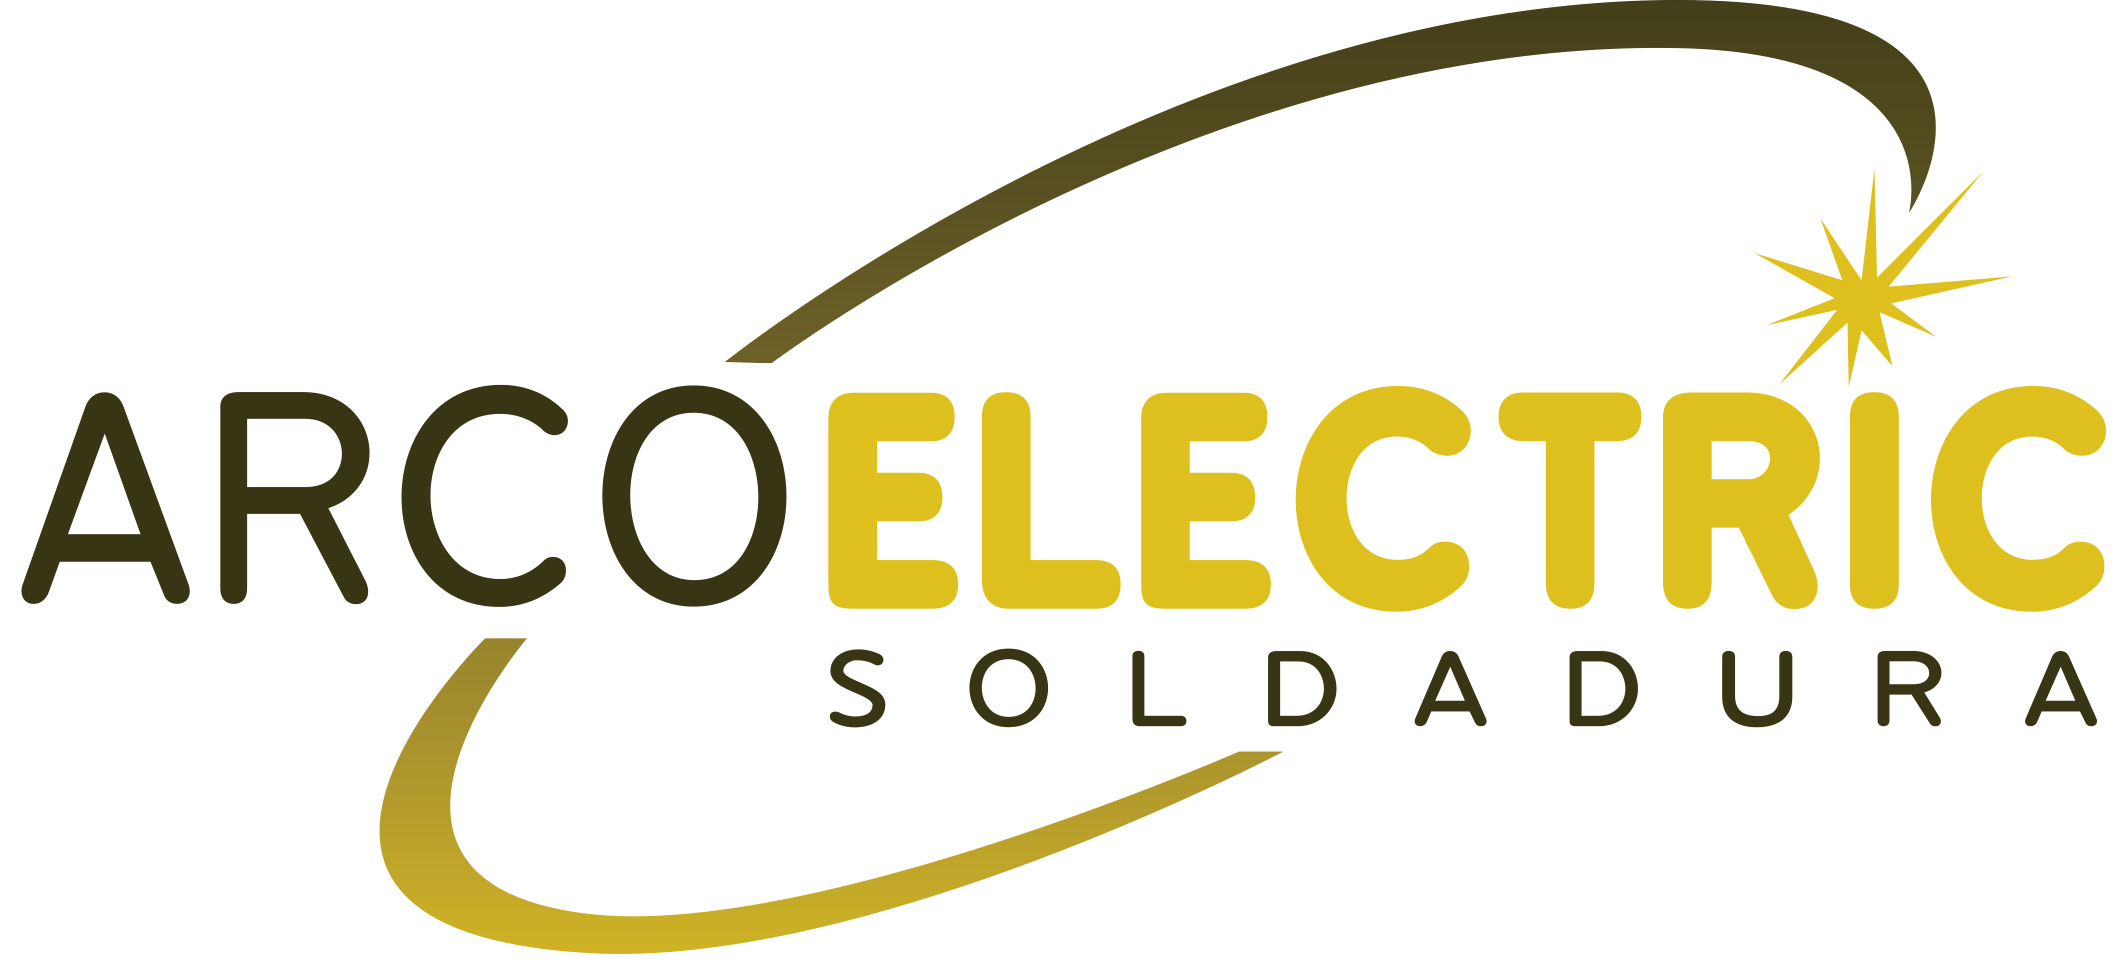 ArcoElectric Soldadura